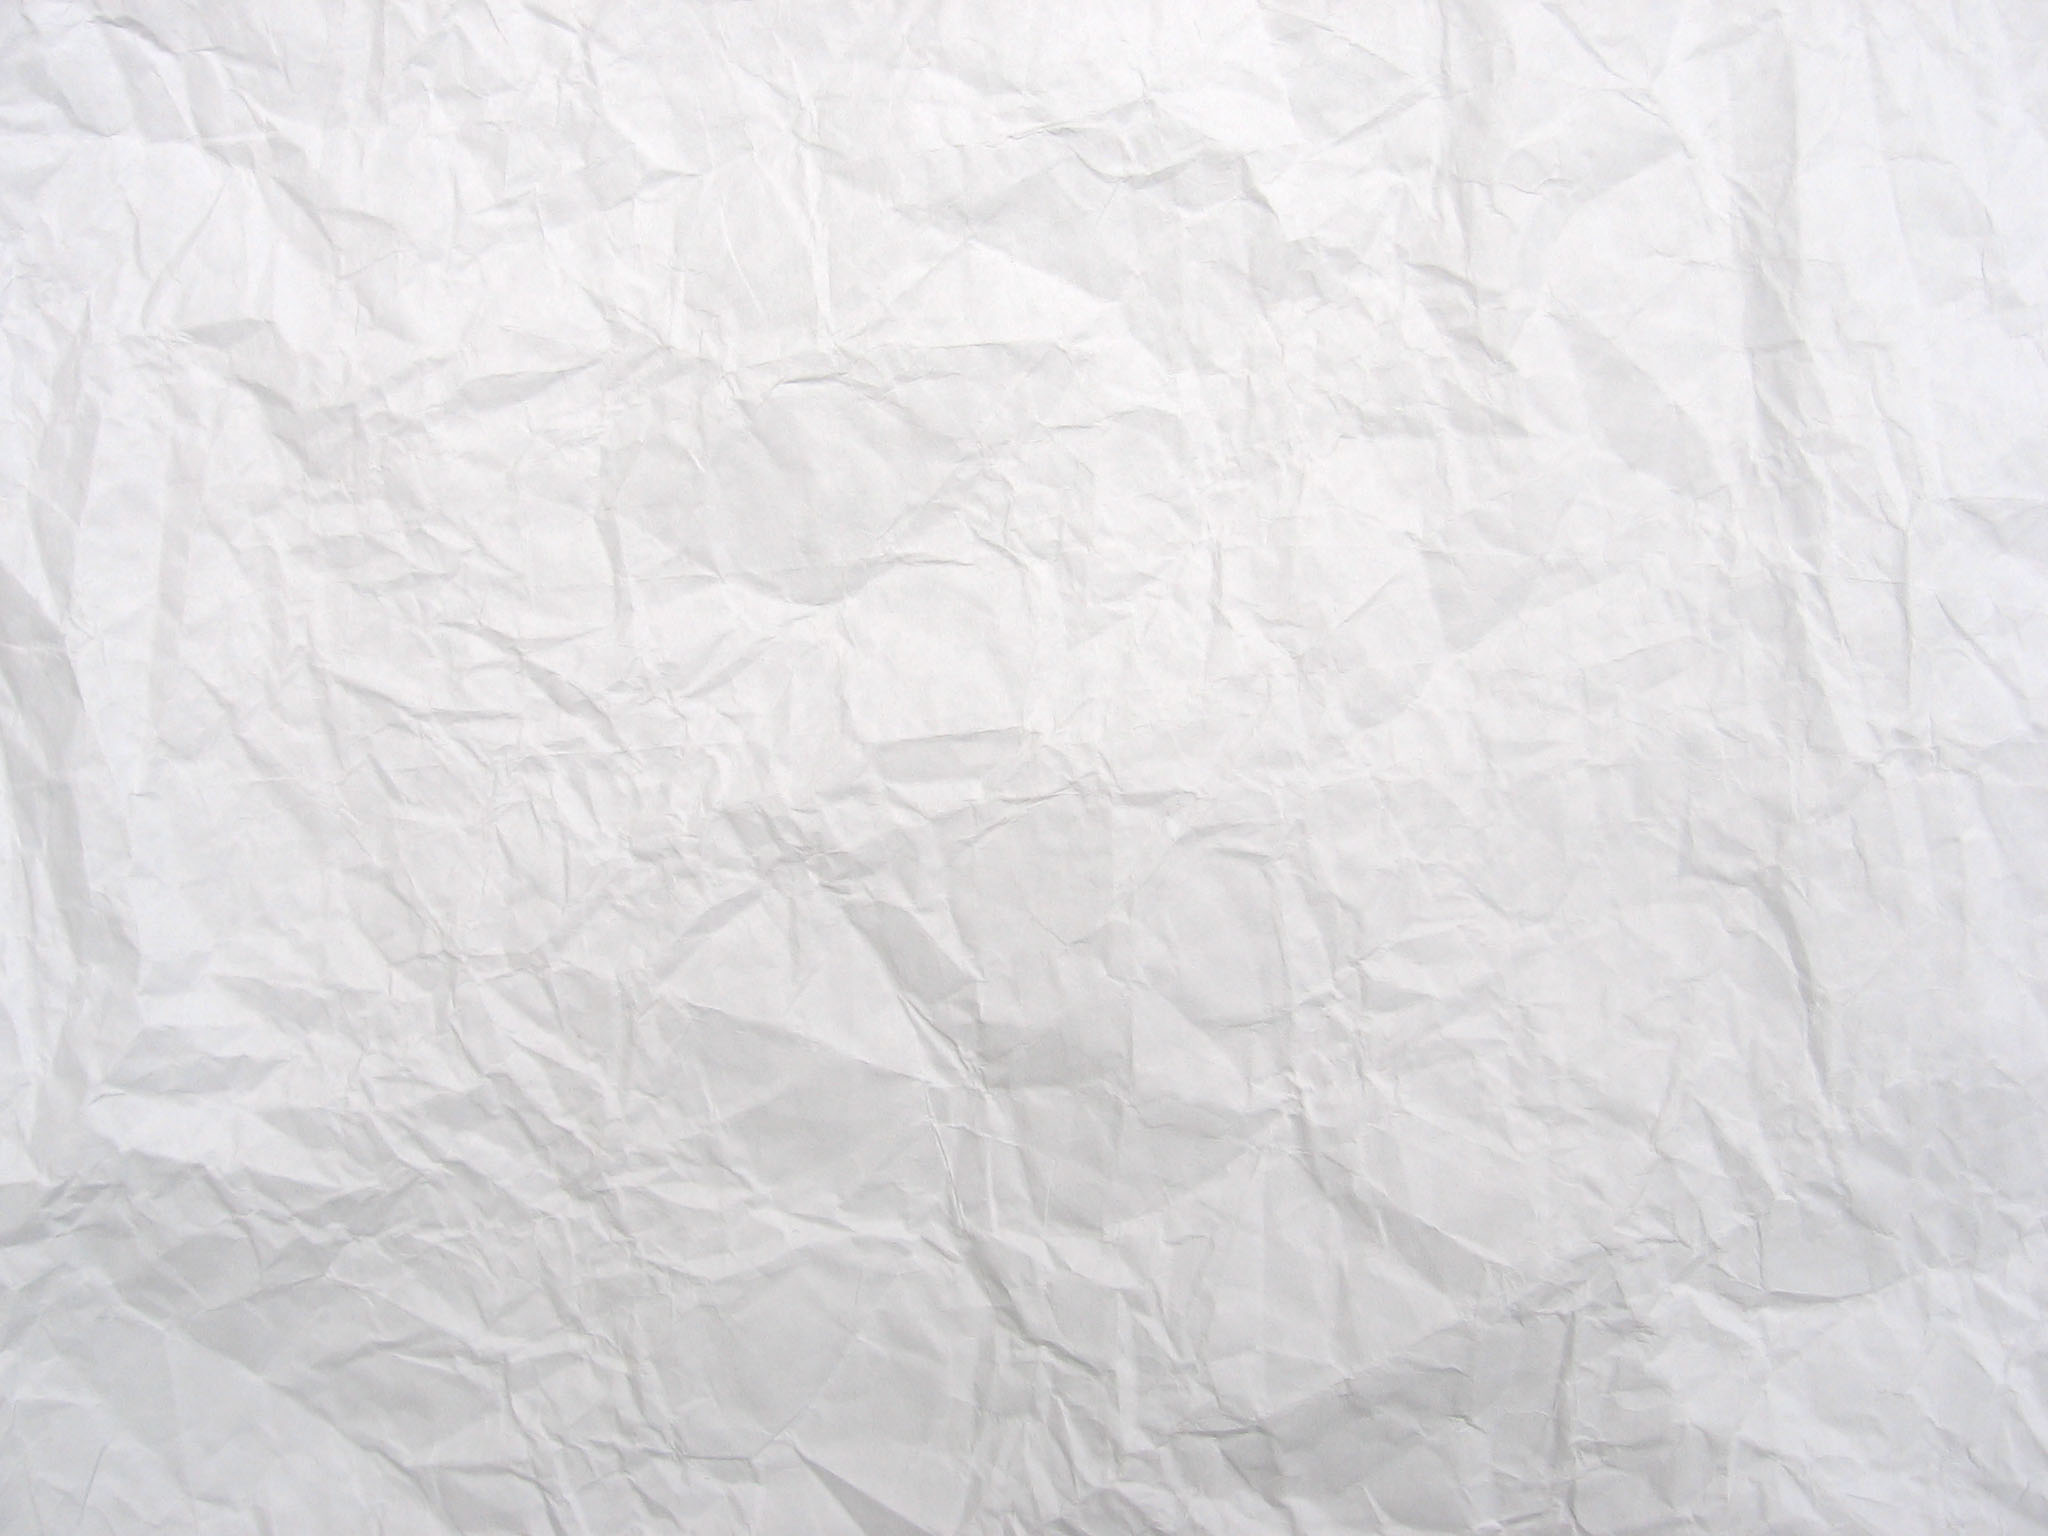 Download Crumpled White Paper Texture Melemel Jpeg Wallpaper 2048x1536 2048x1536